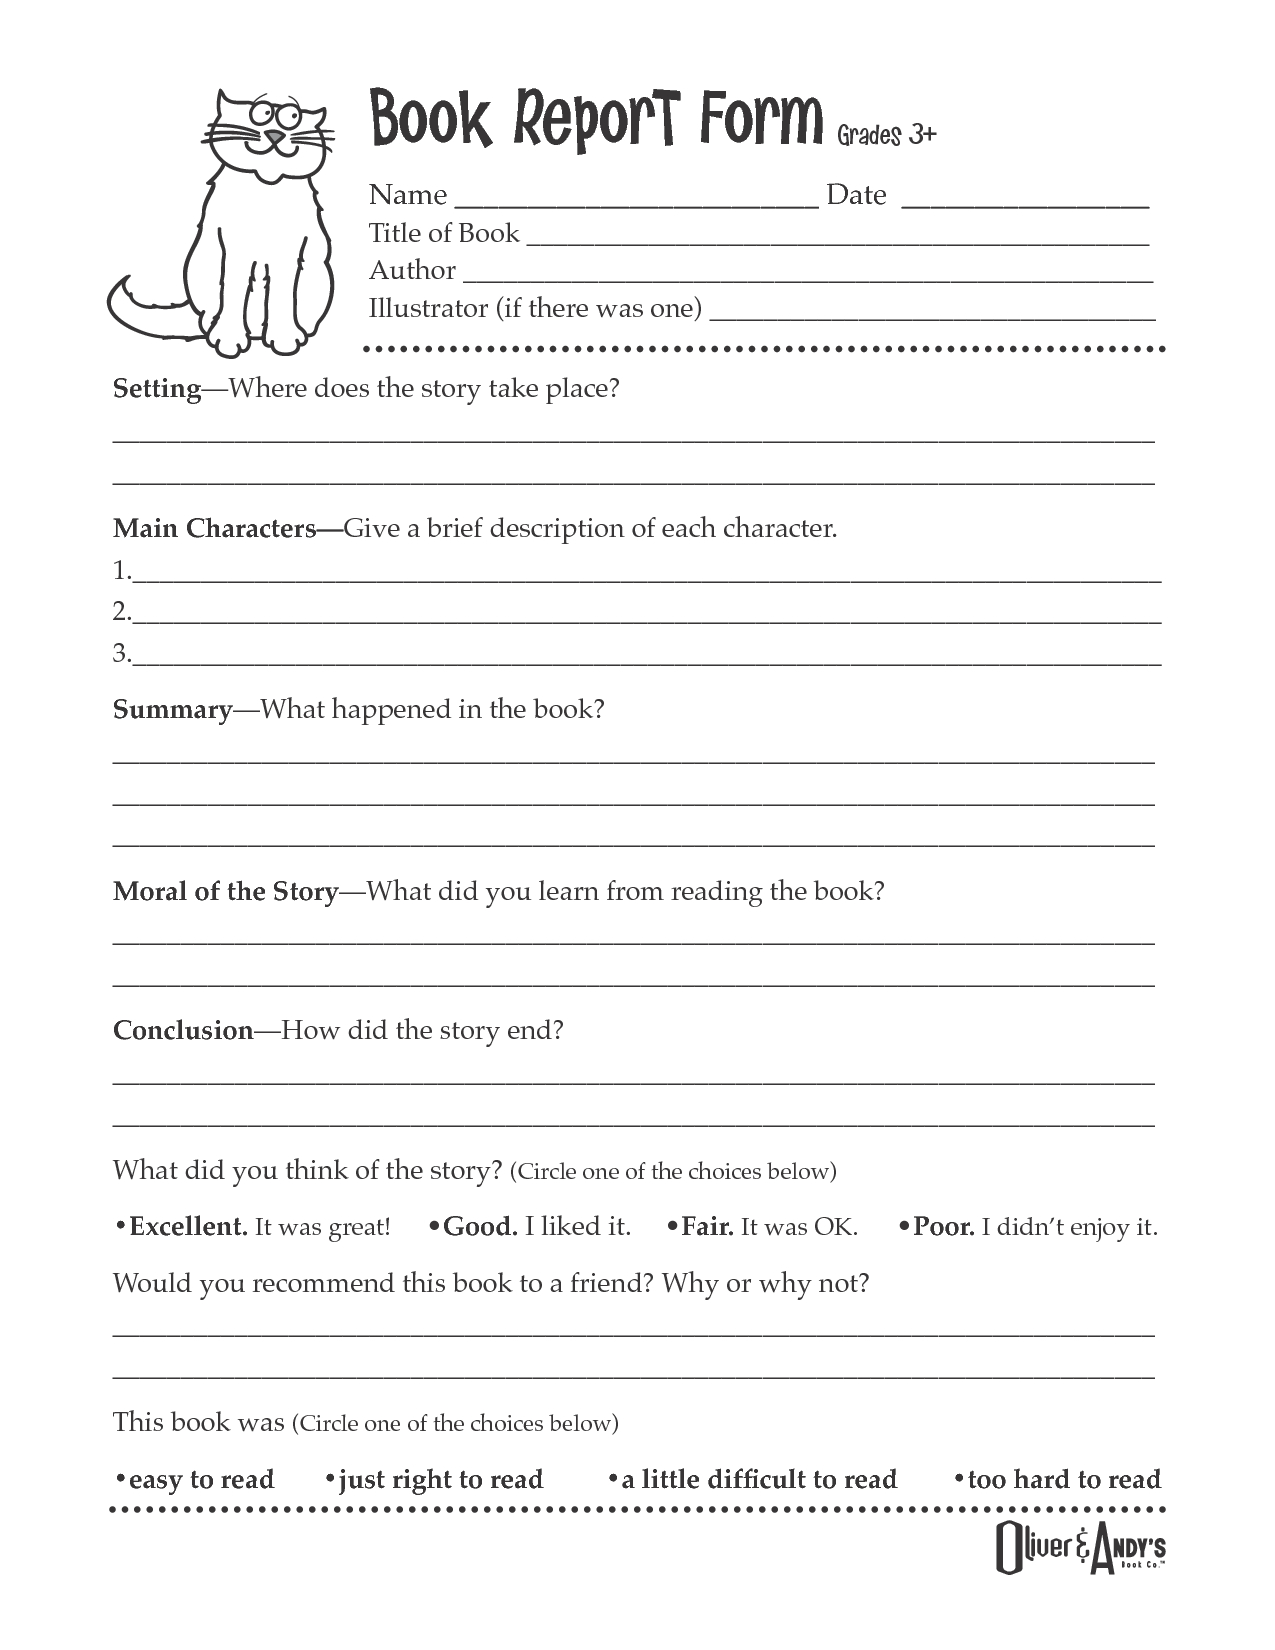 Second Grade Book Report Template | Book Report Form Grades Regarding Story Report Template